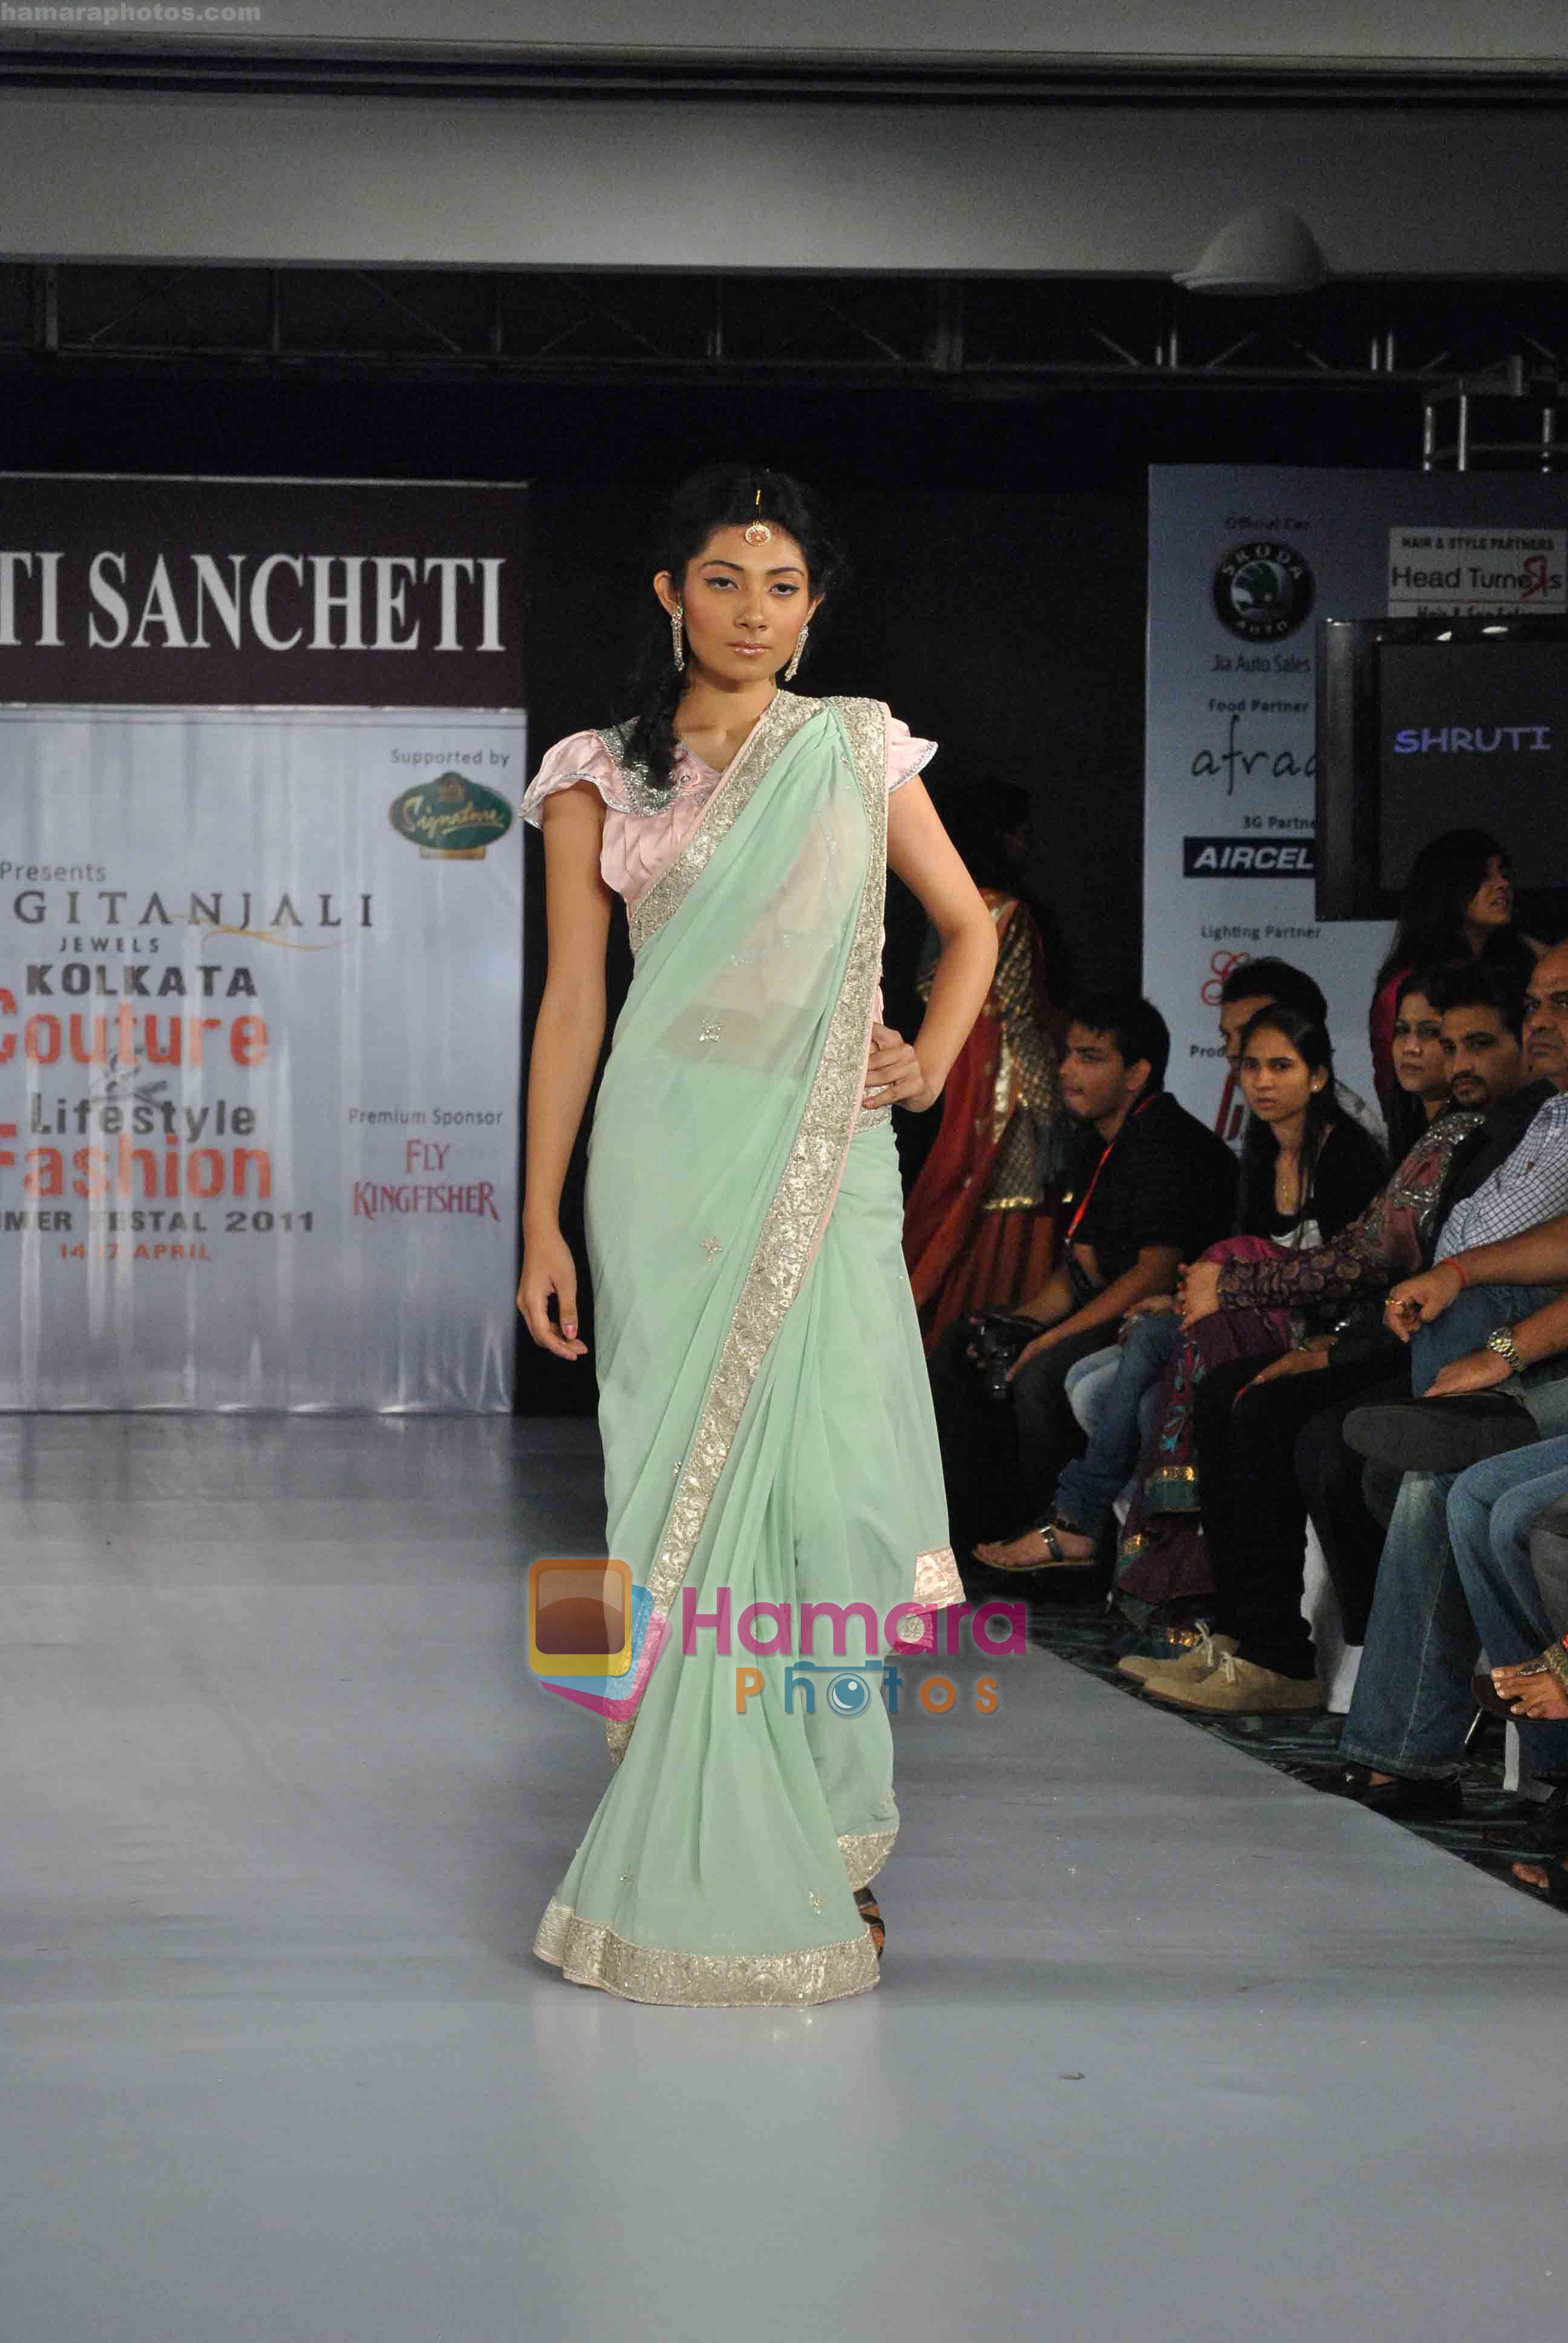 Model walk the ramp for Shruti Sancheti of PINNACLE at the Kolkata Couture Lifestyle Fashion Week on the 17th of April 2011 